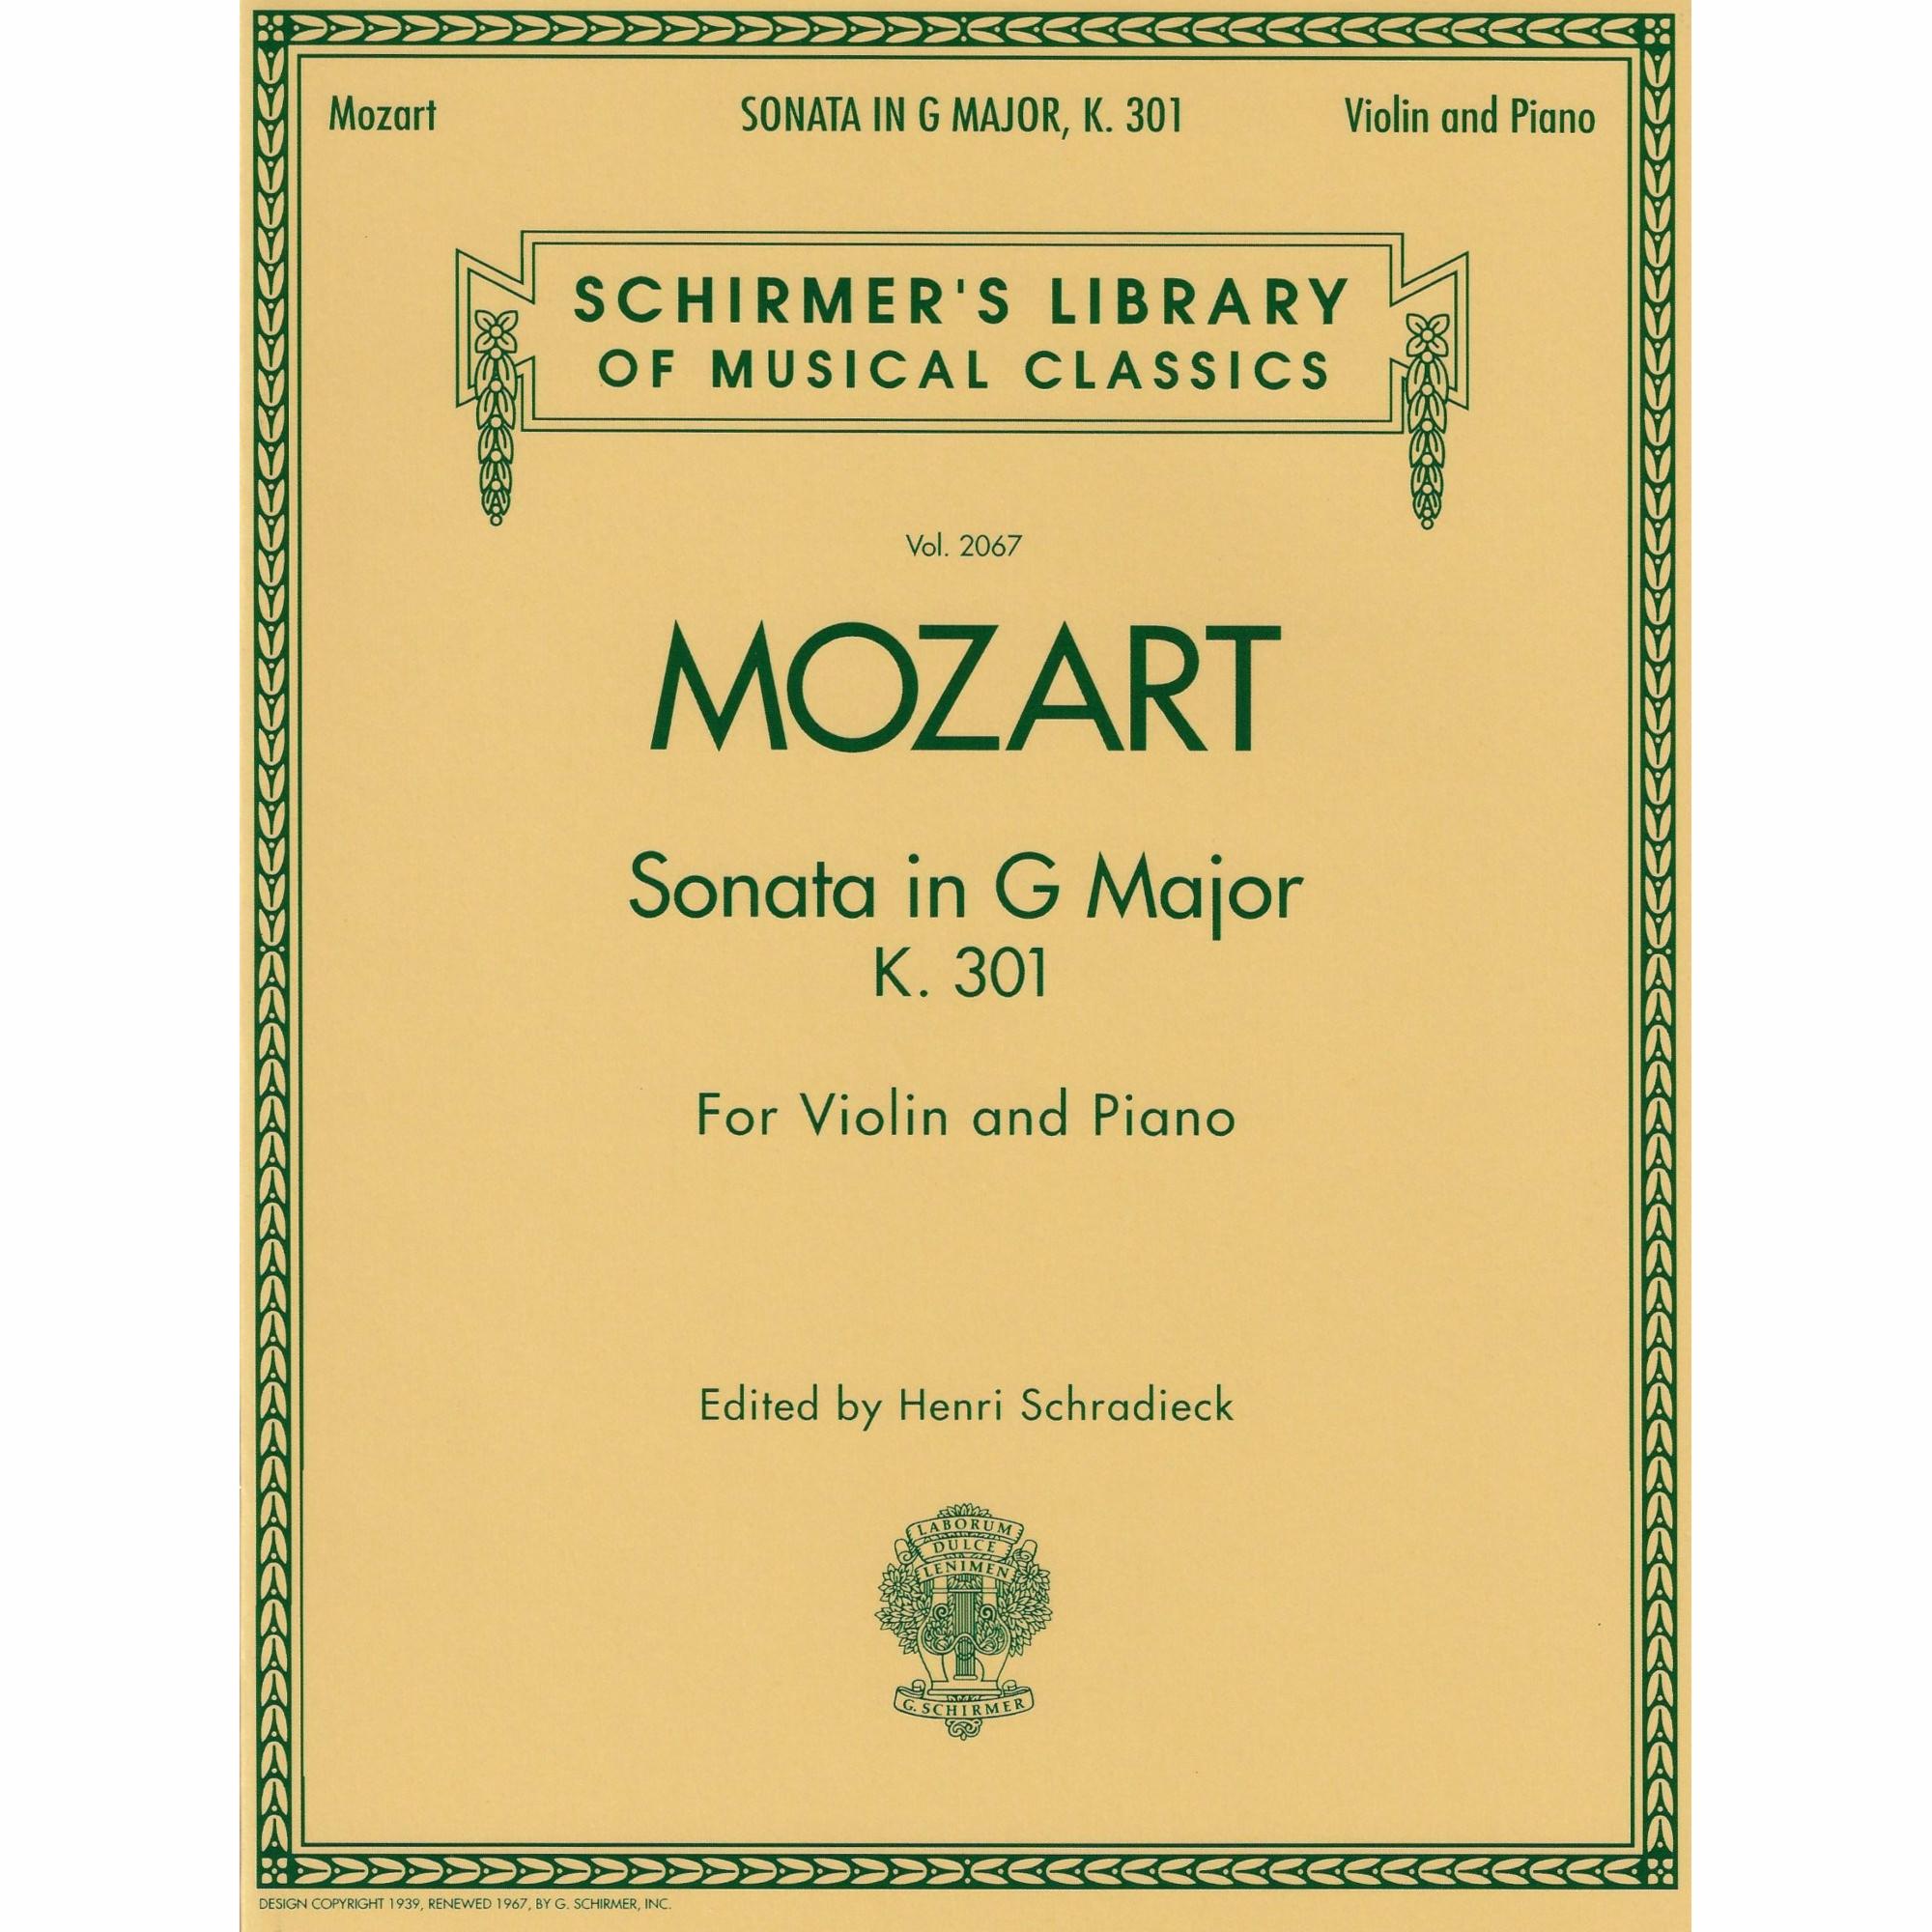 Mozart -- Sonata in G Major, K. 301 for Violin and Piano